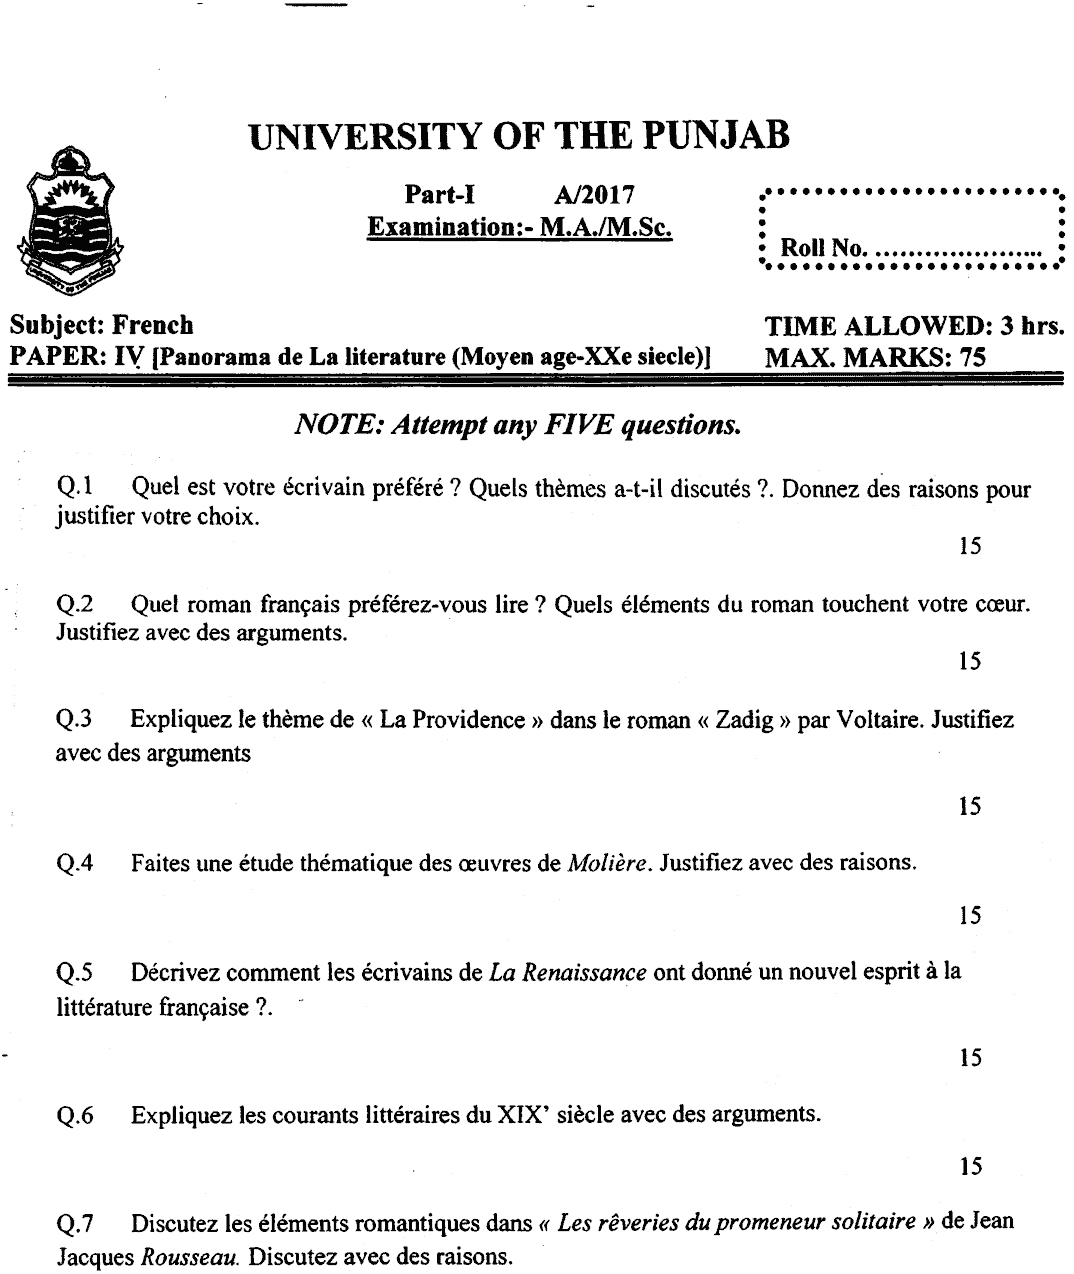 MA Part 1 French Panorama De La Litterature Past Paper 2017 Punjab University